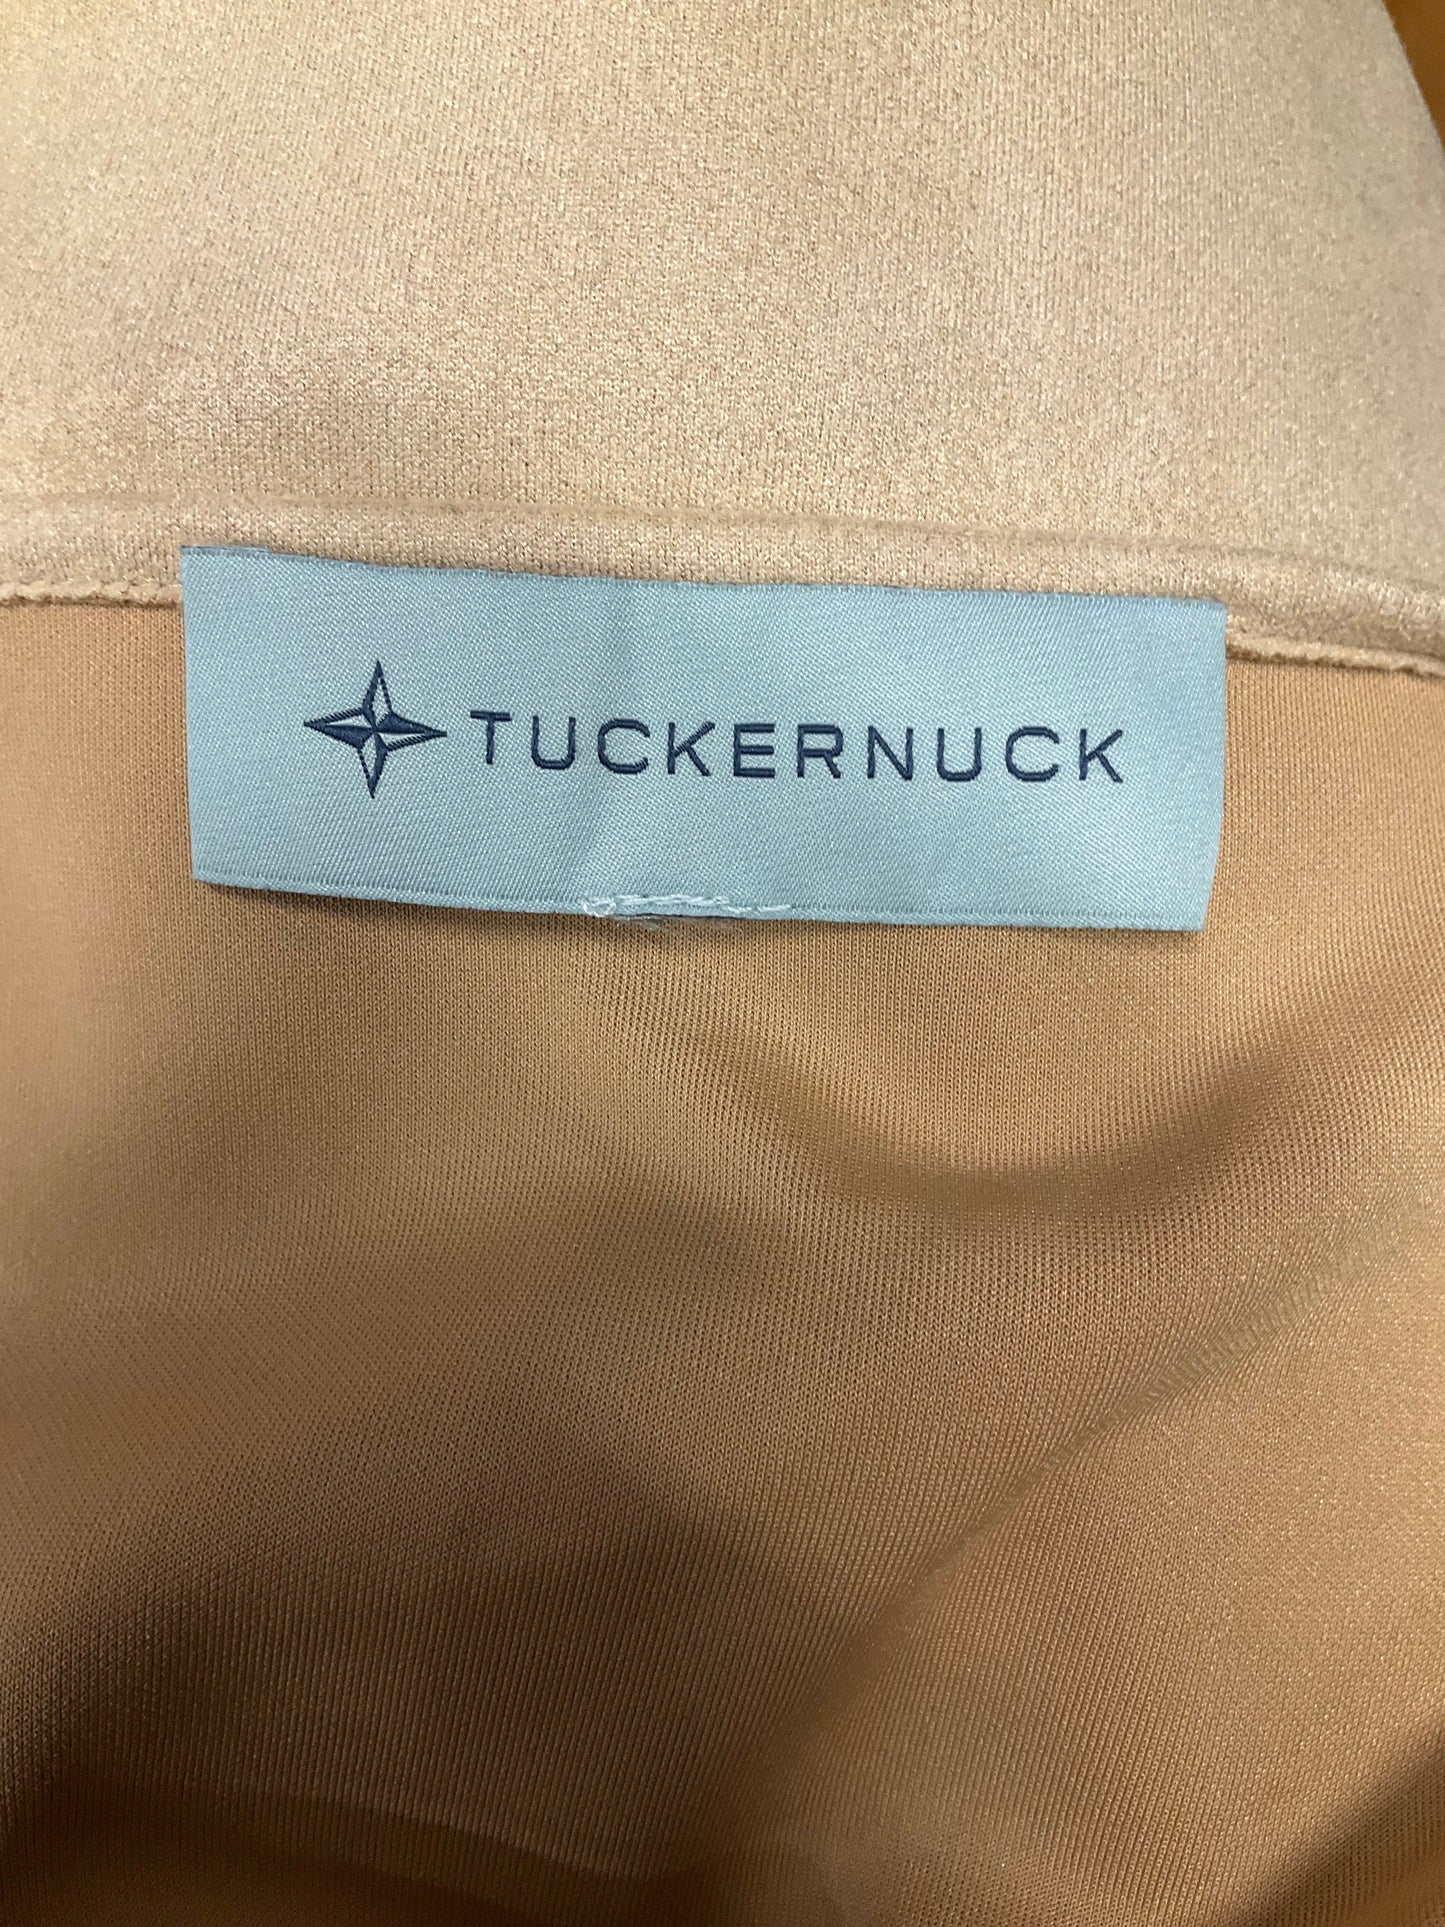 Beige Top Long Sleeve Tuckernuck, Size Xl